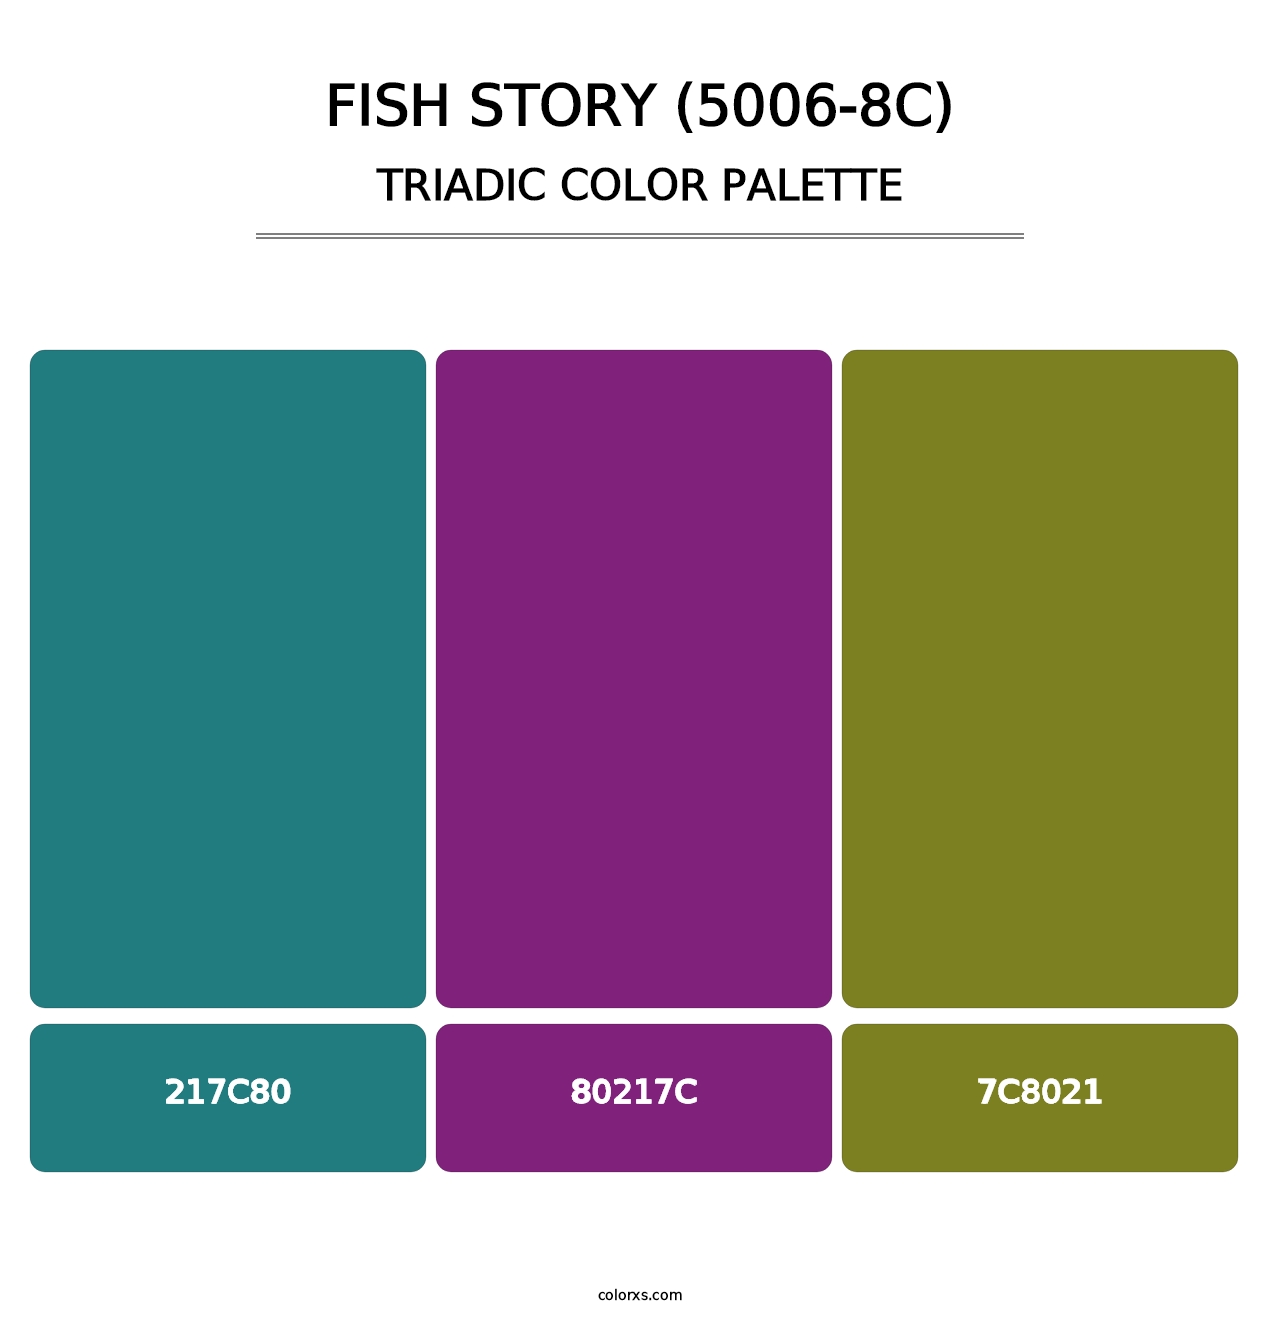 Fish Story (5006-8C) - Triadic Color Palette